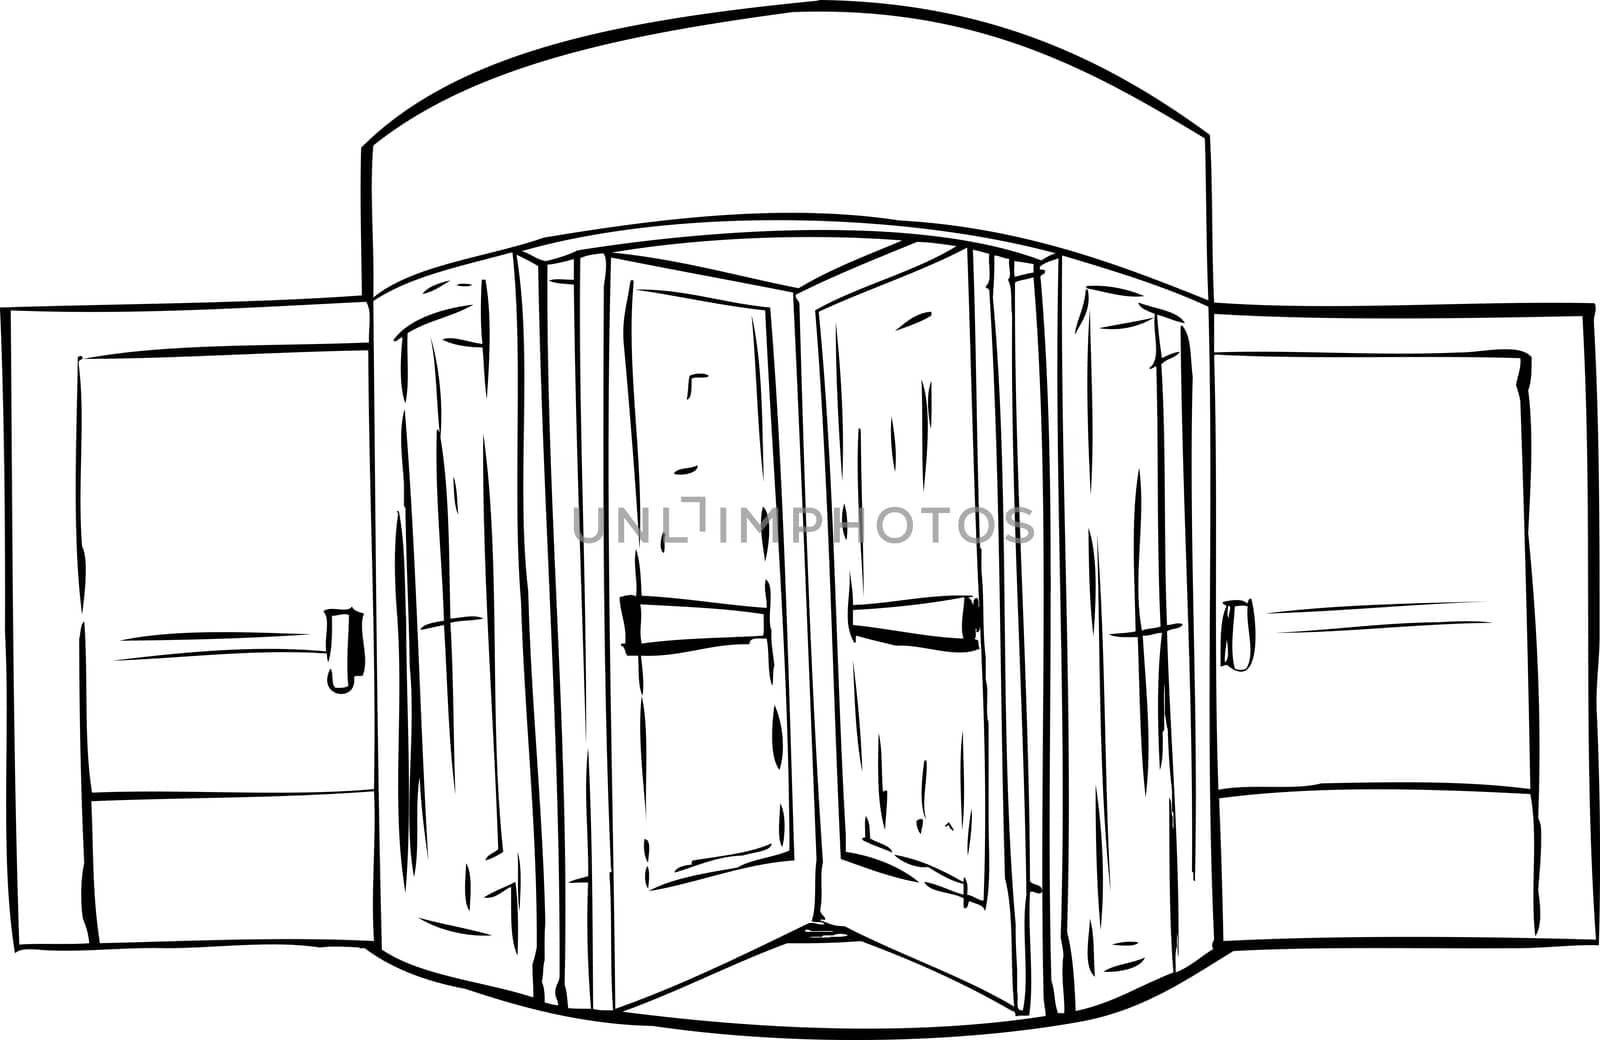 Background outline of revolving door over white background